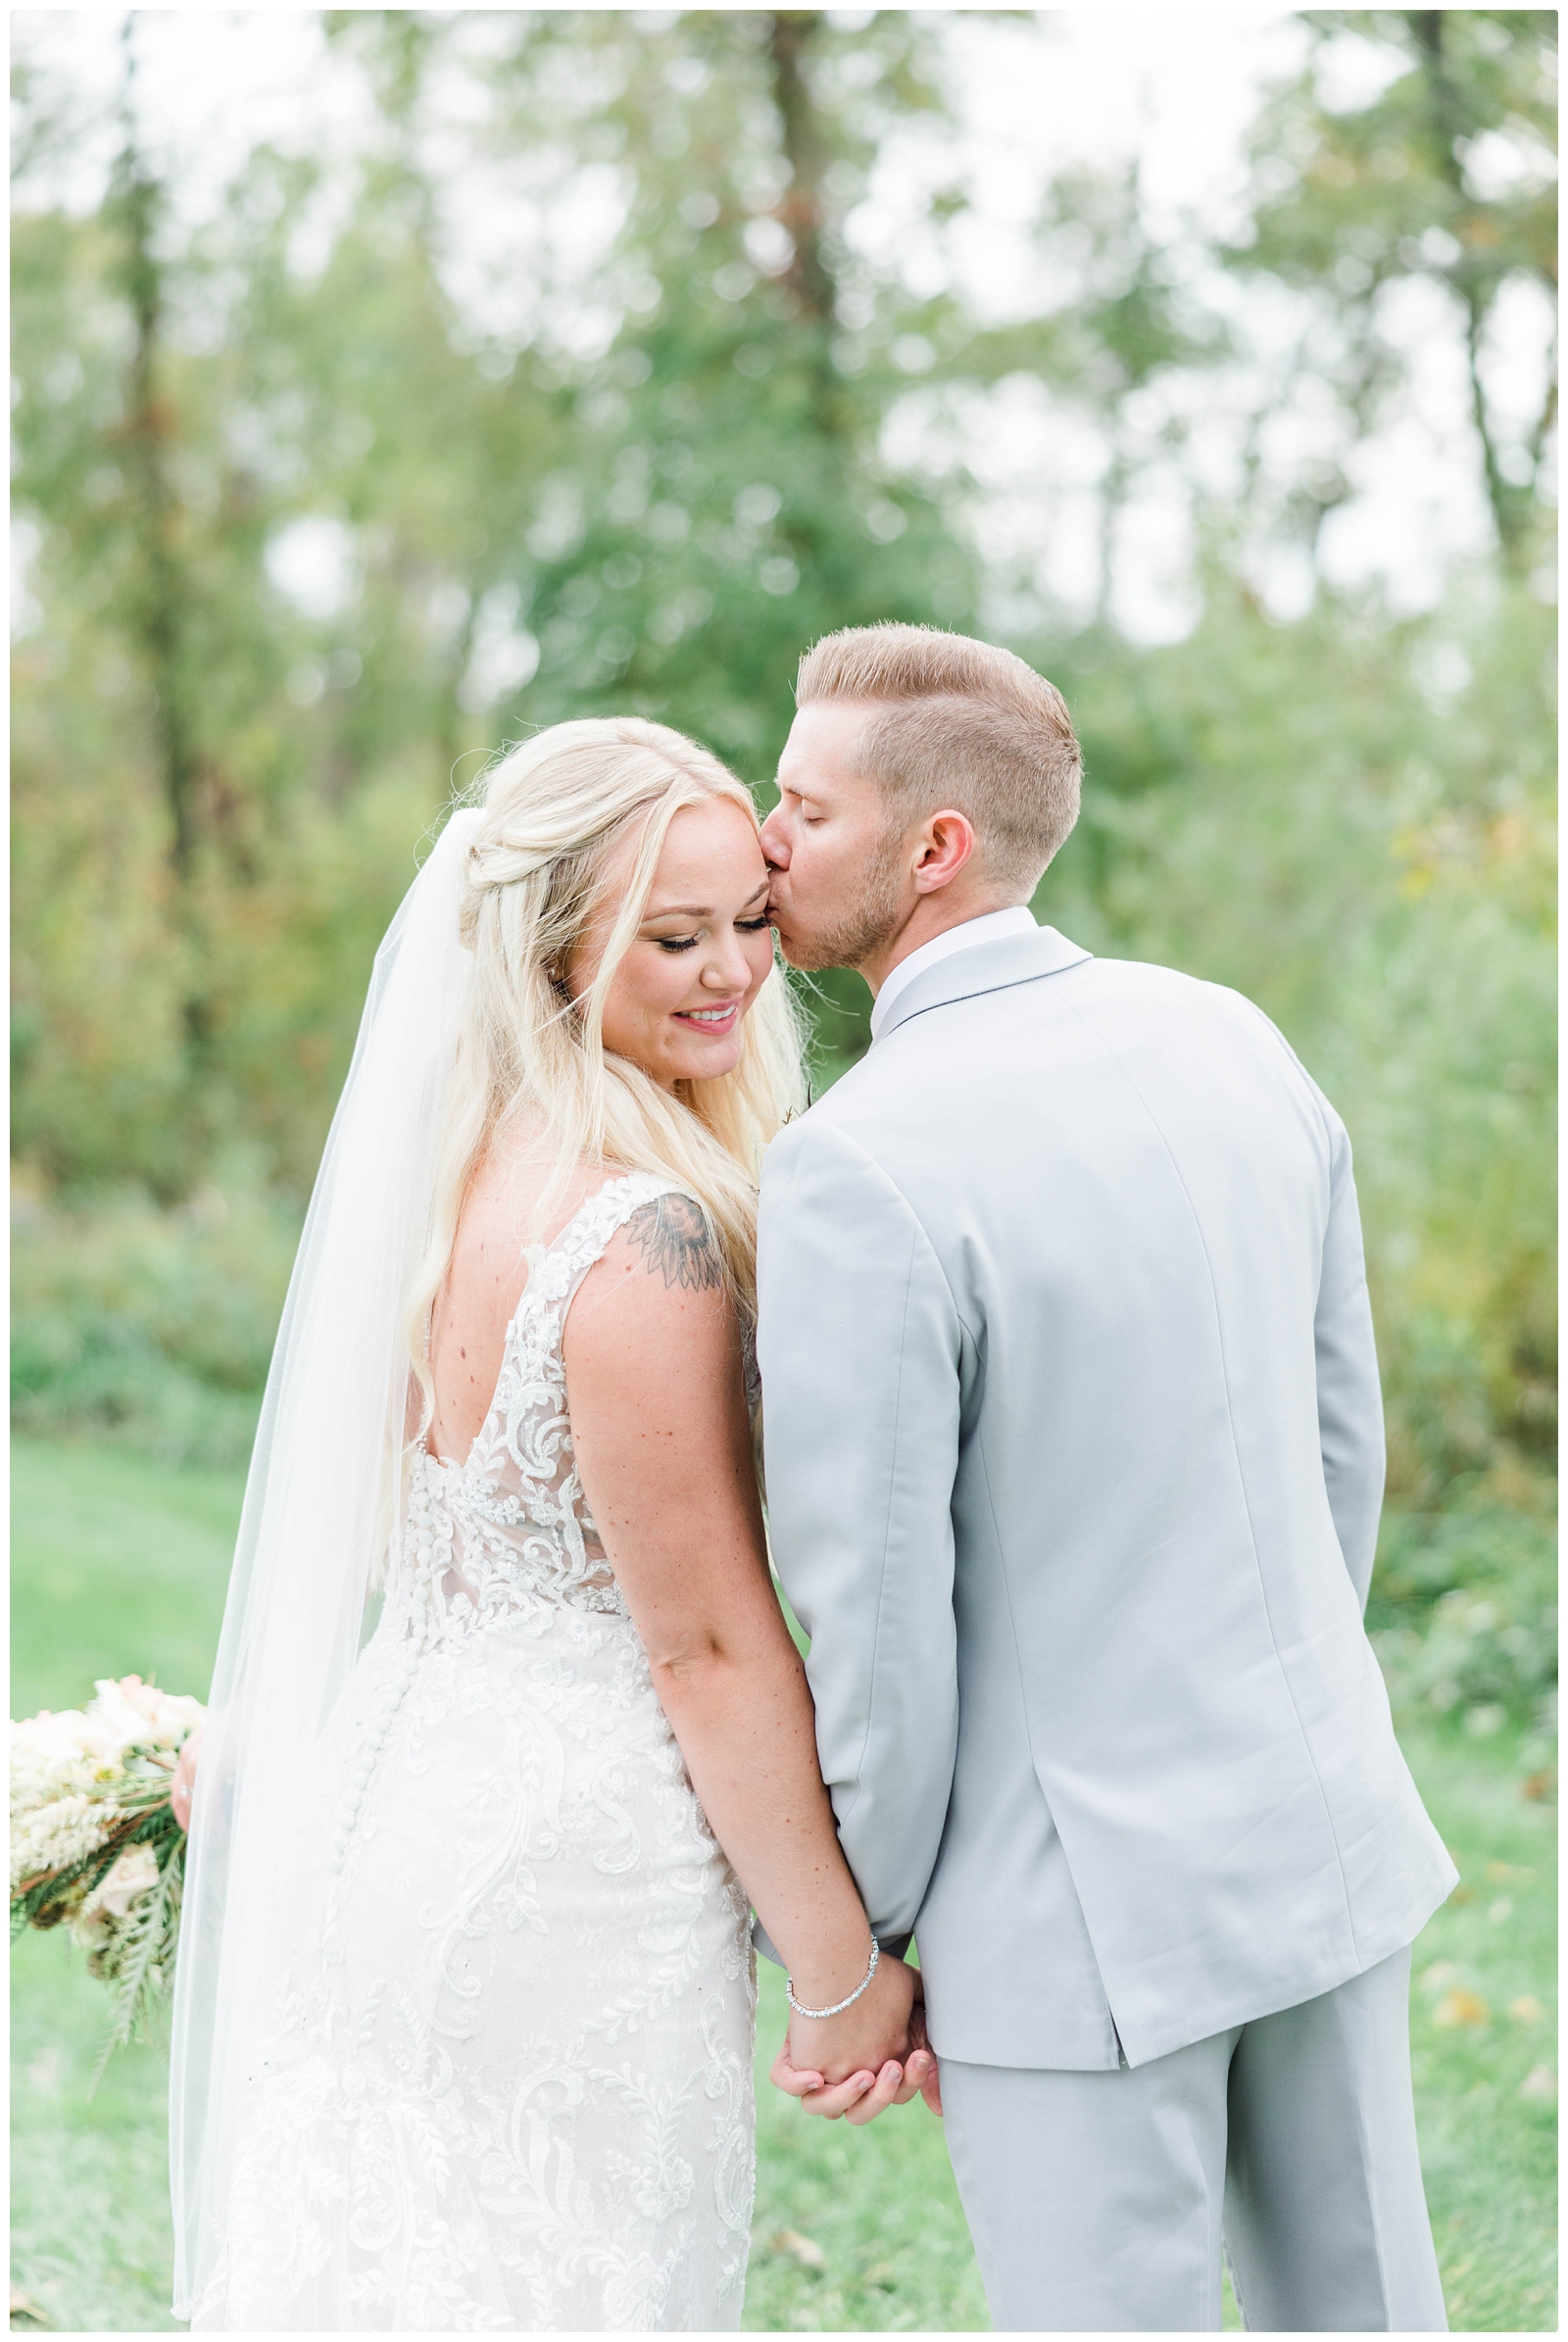 Bear Creek Farm Michigan wedding photos